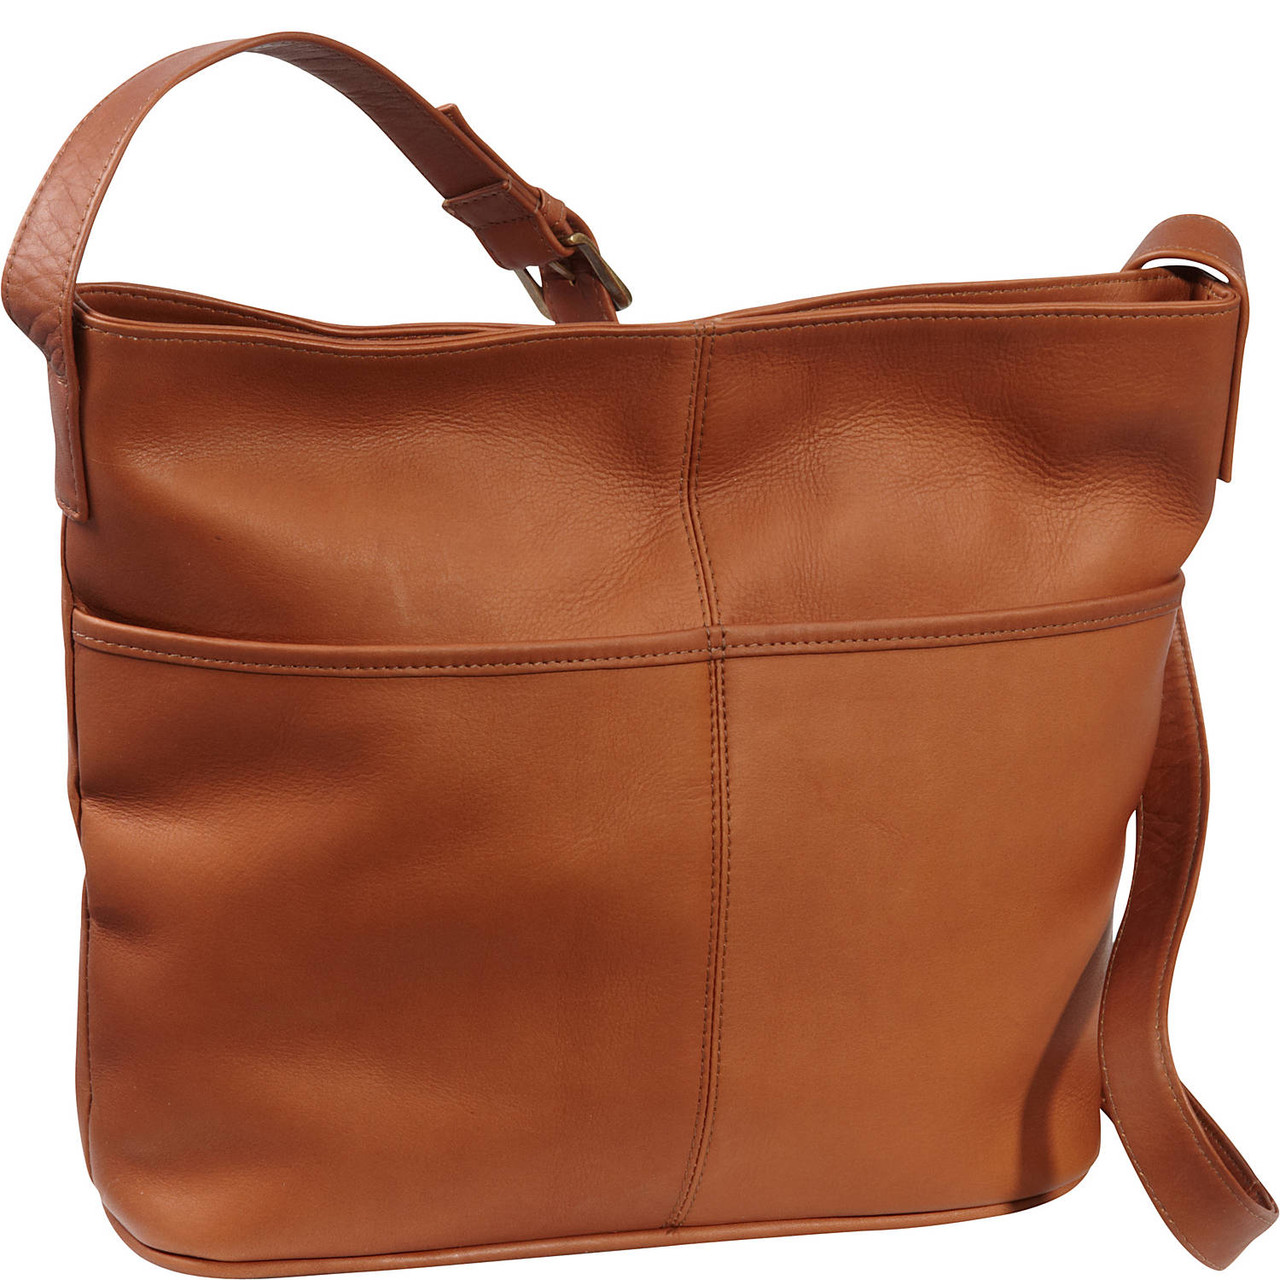 Hemlock Hobo - Vaquetta Handbag - Le Donne Leather